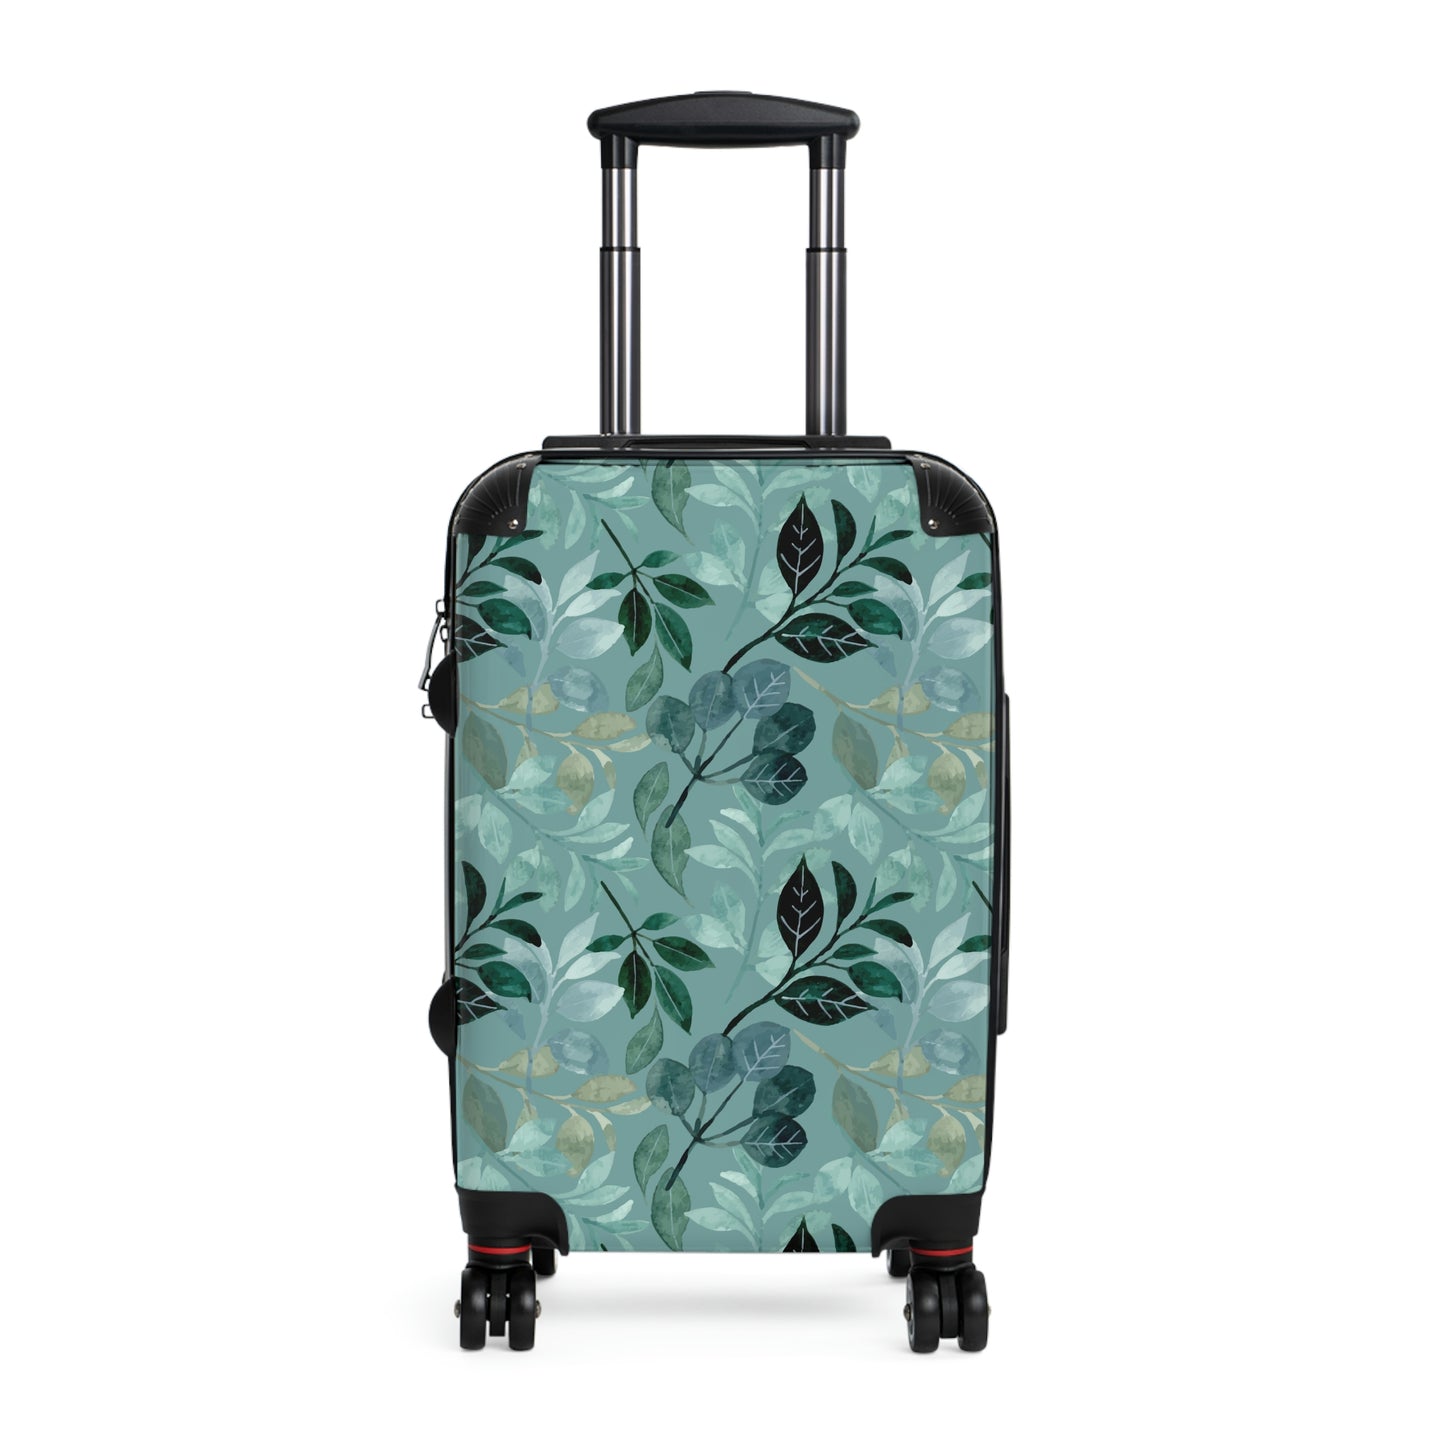 Teal Suitcase / Green Leaf Luggage